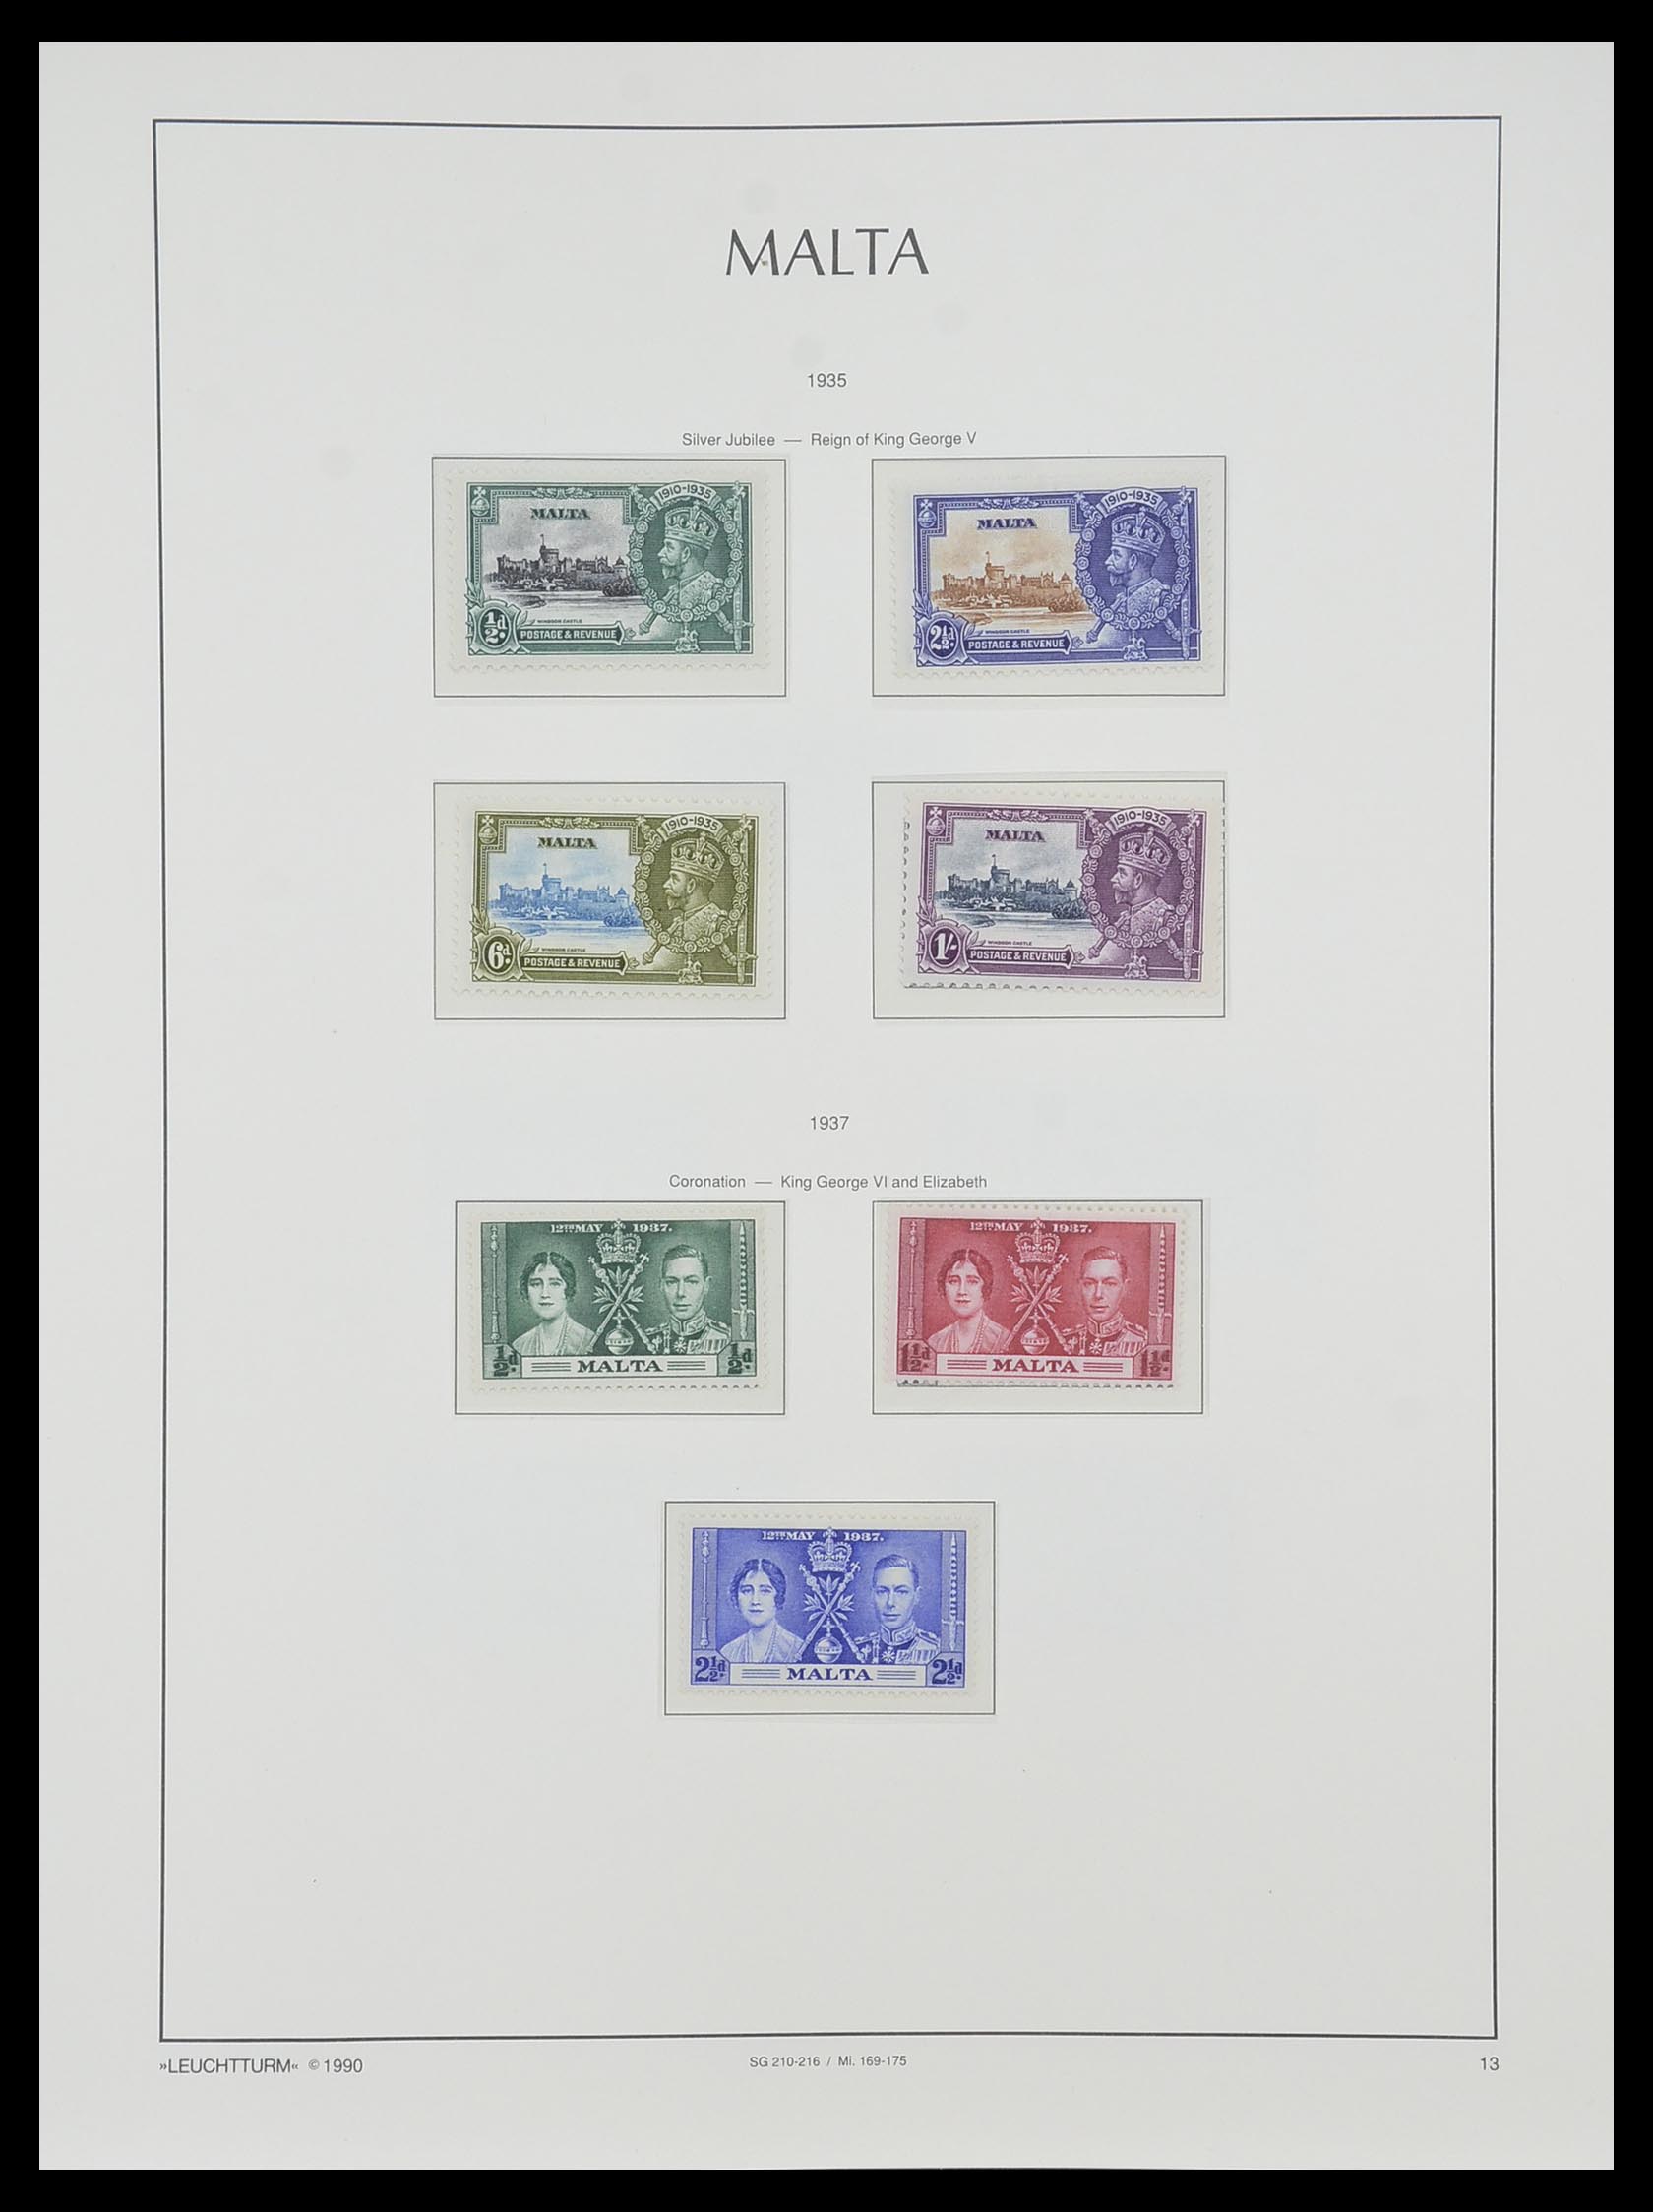 33968 013 - Stamp collection 33968 Malta 1861-2001.